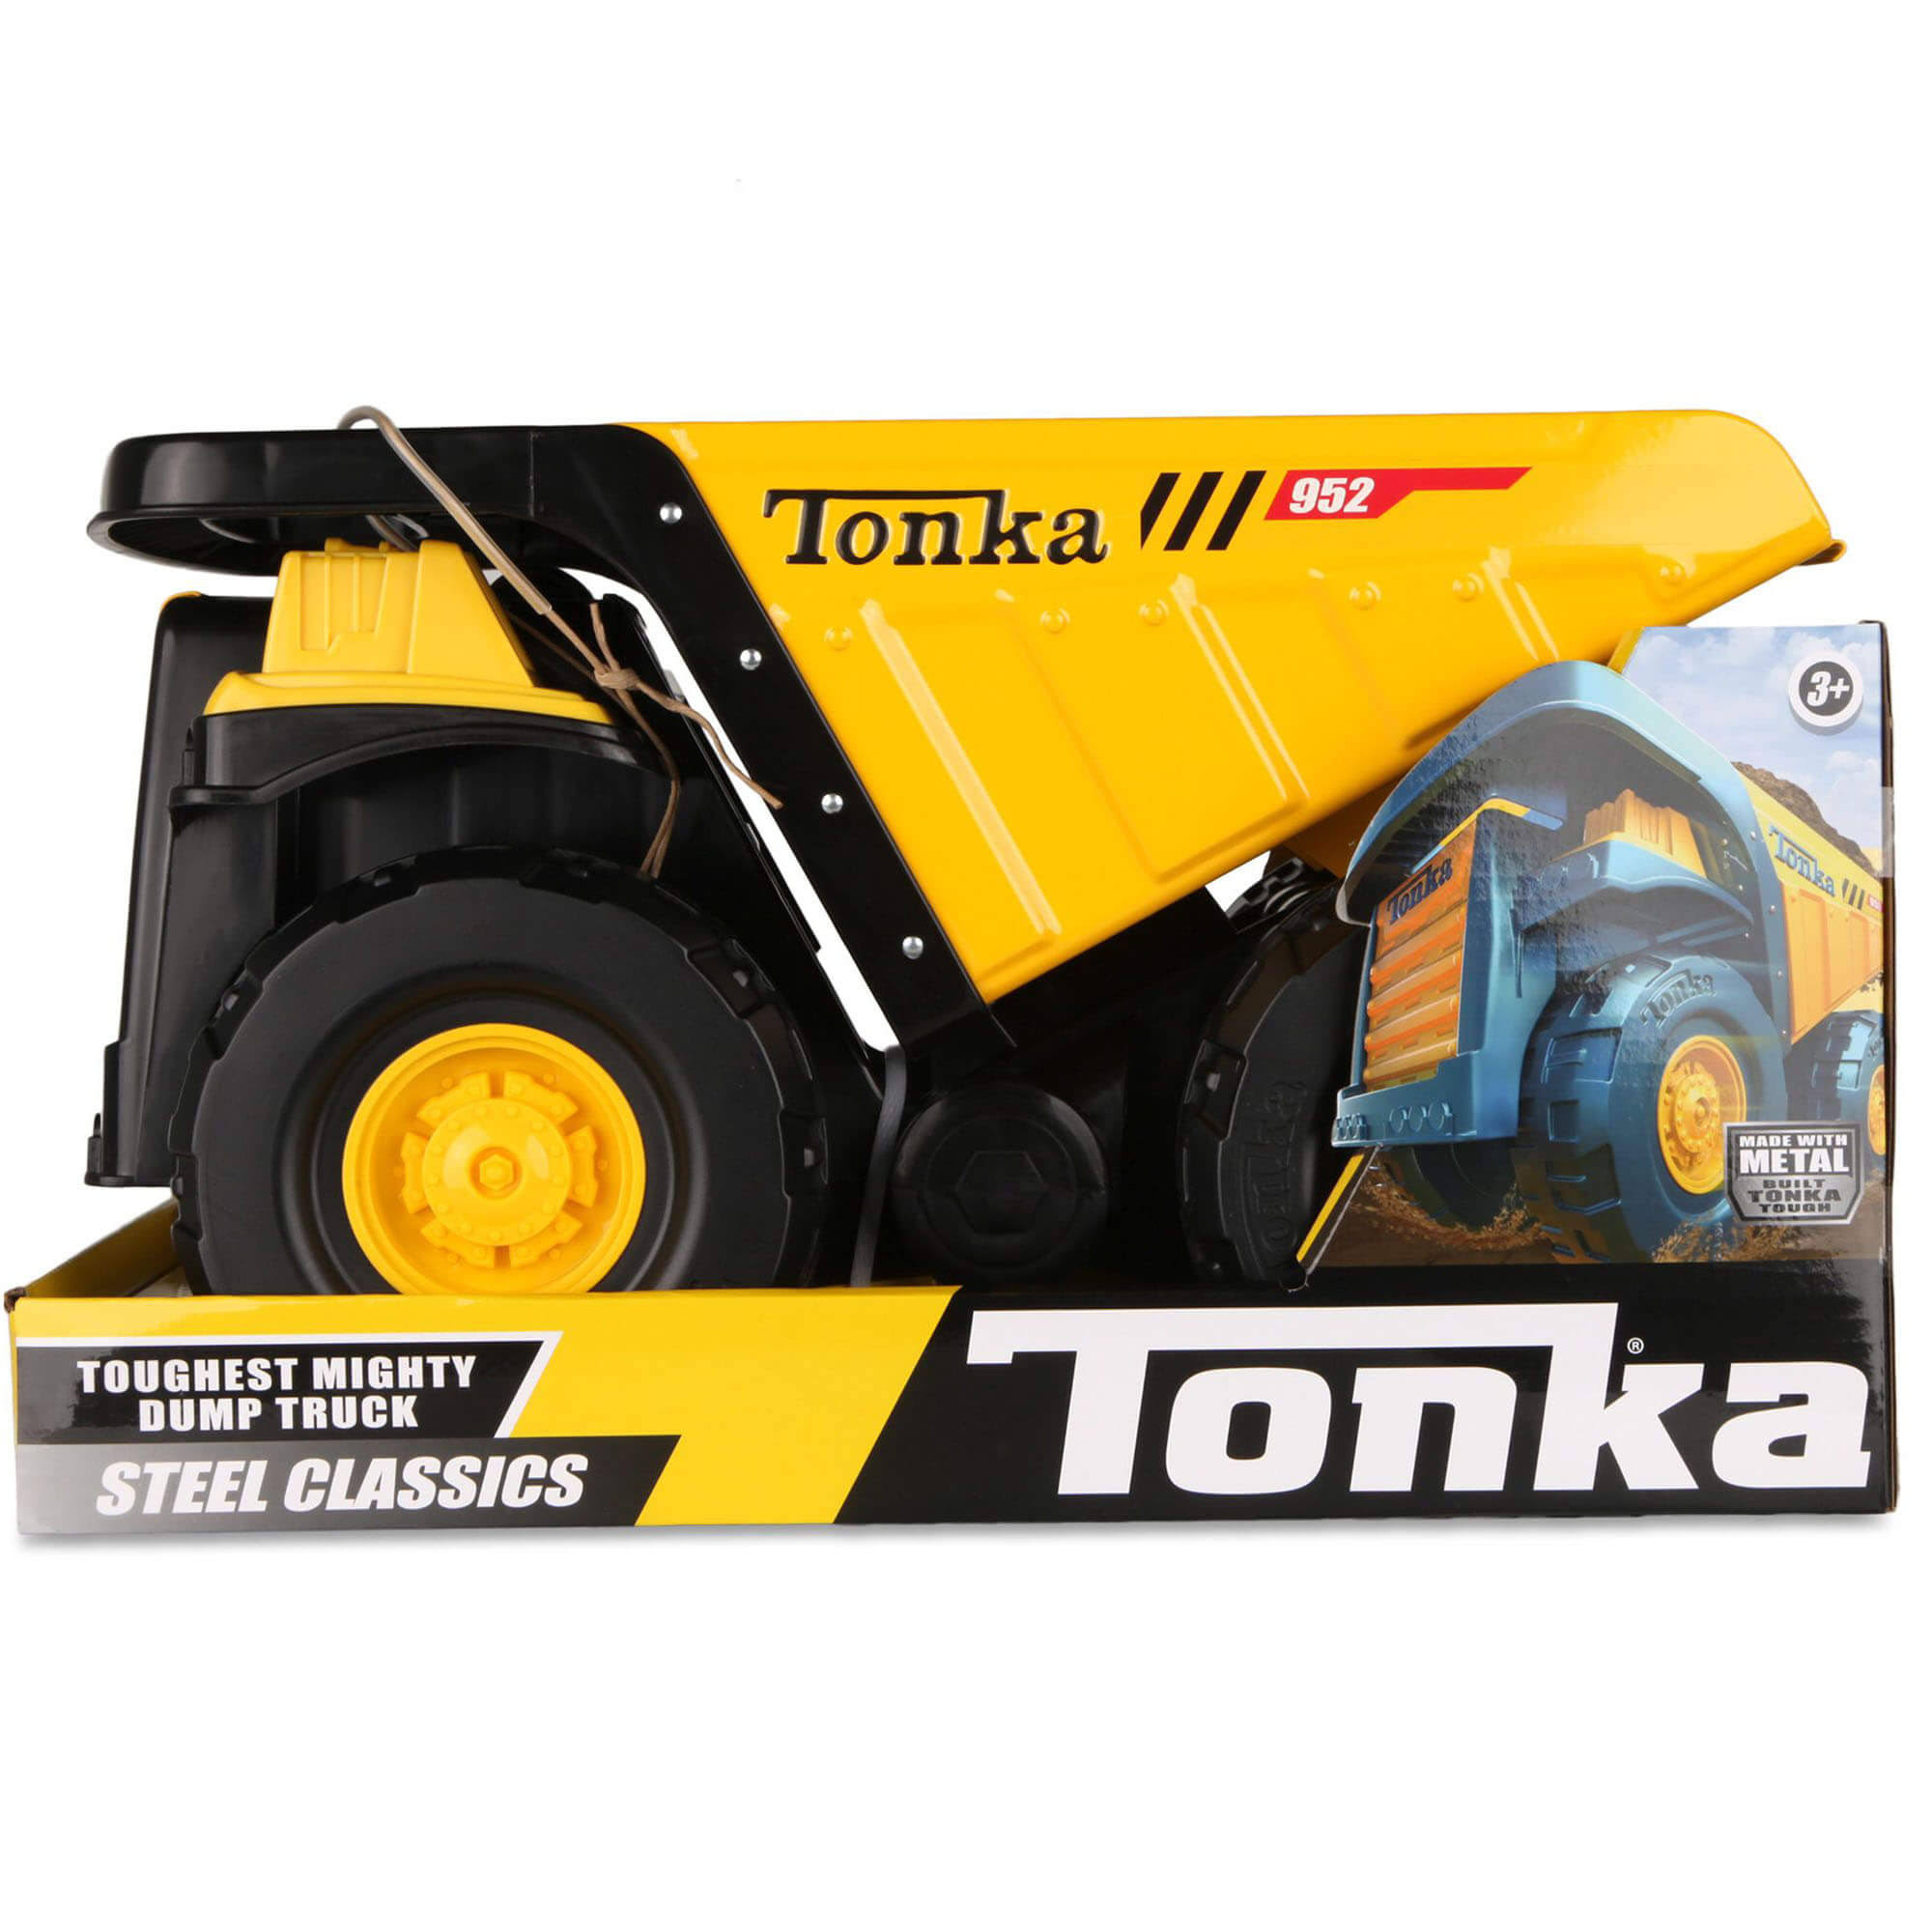 Tonka - Steel Classics - Toughest Mighty Dump Truck